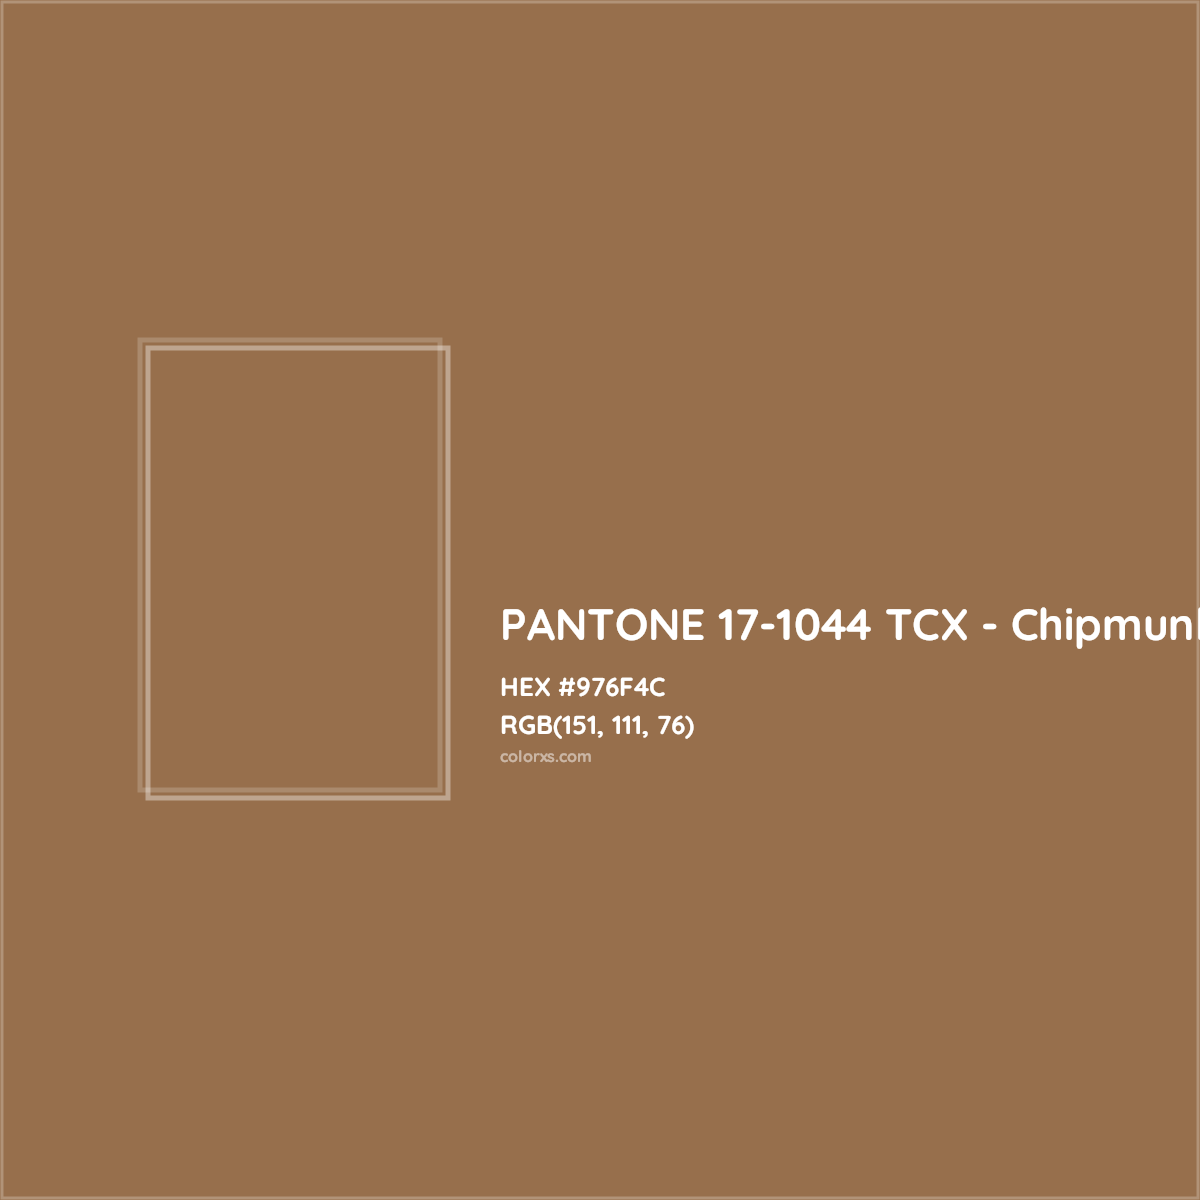 HEX #976F4C PANTONE 17-1044 TCX - Chipmunk CMS Pantone TCX - Color Code